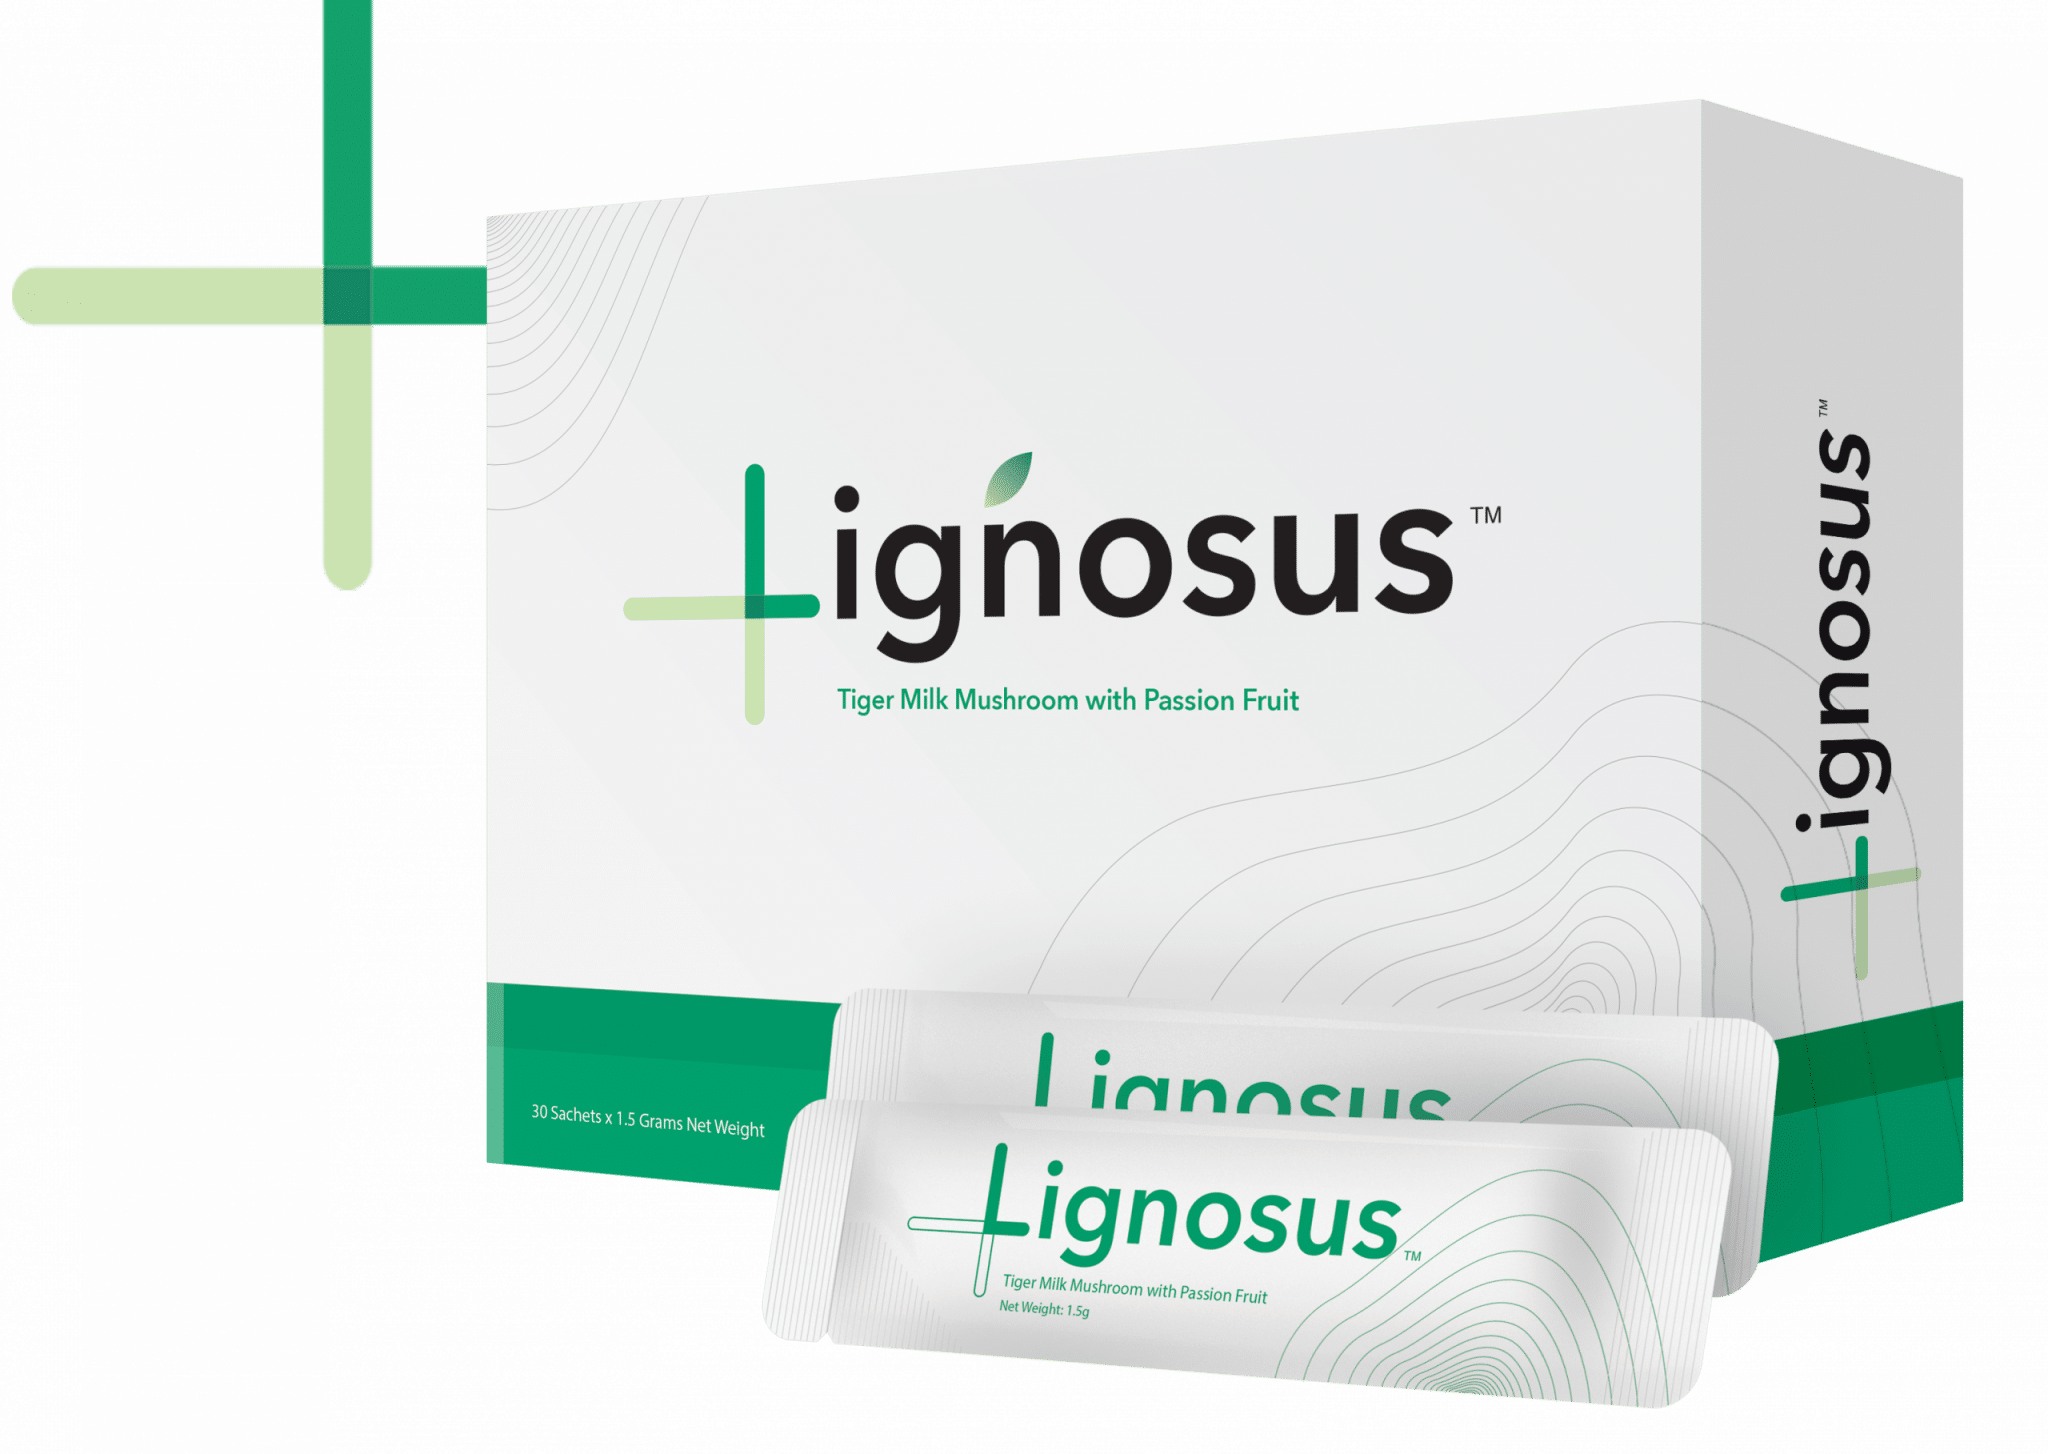 Lignosus United States - Banner Contact Us - Image001